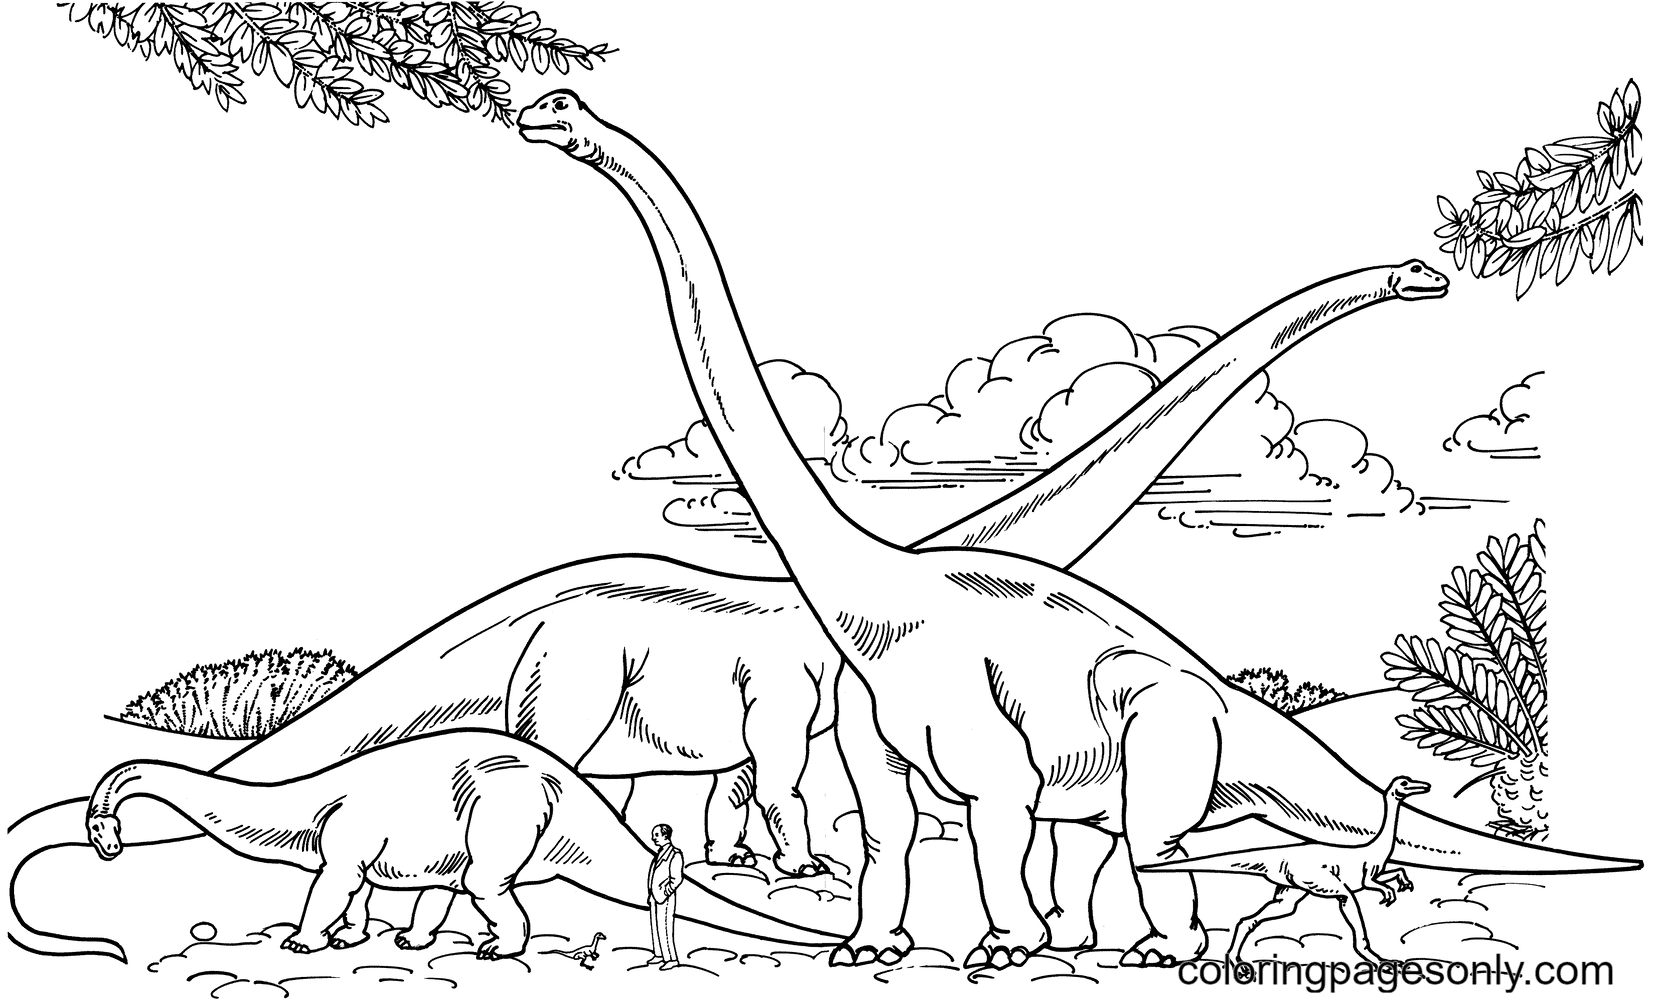 Comparaison du Barosaurus Hypselosaurus et du Gallimimus avec l'humain de Jurassic World